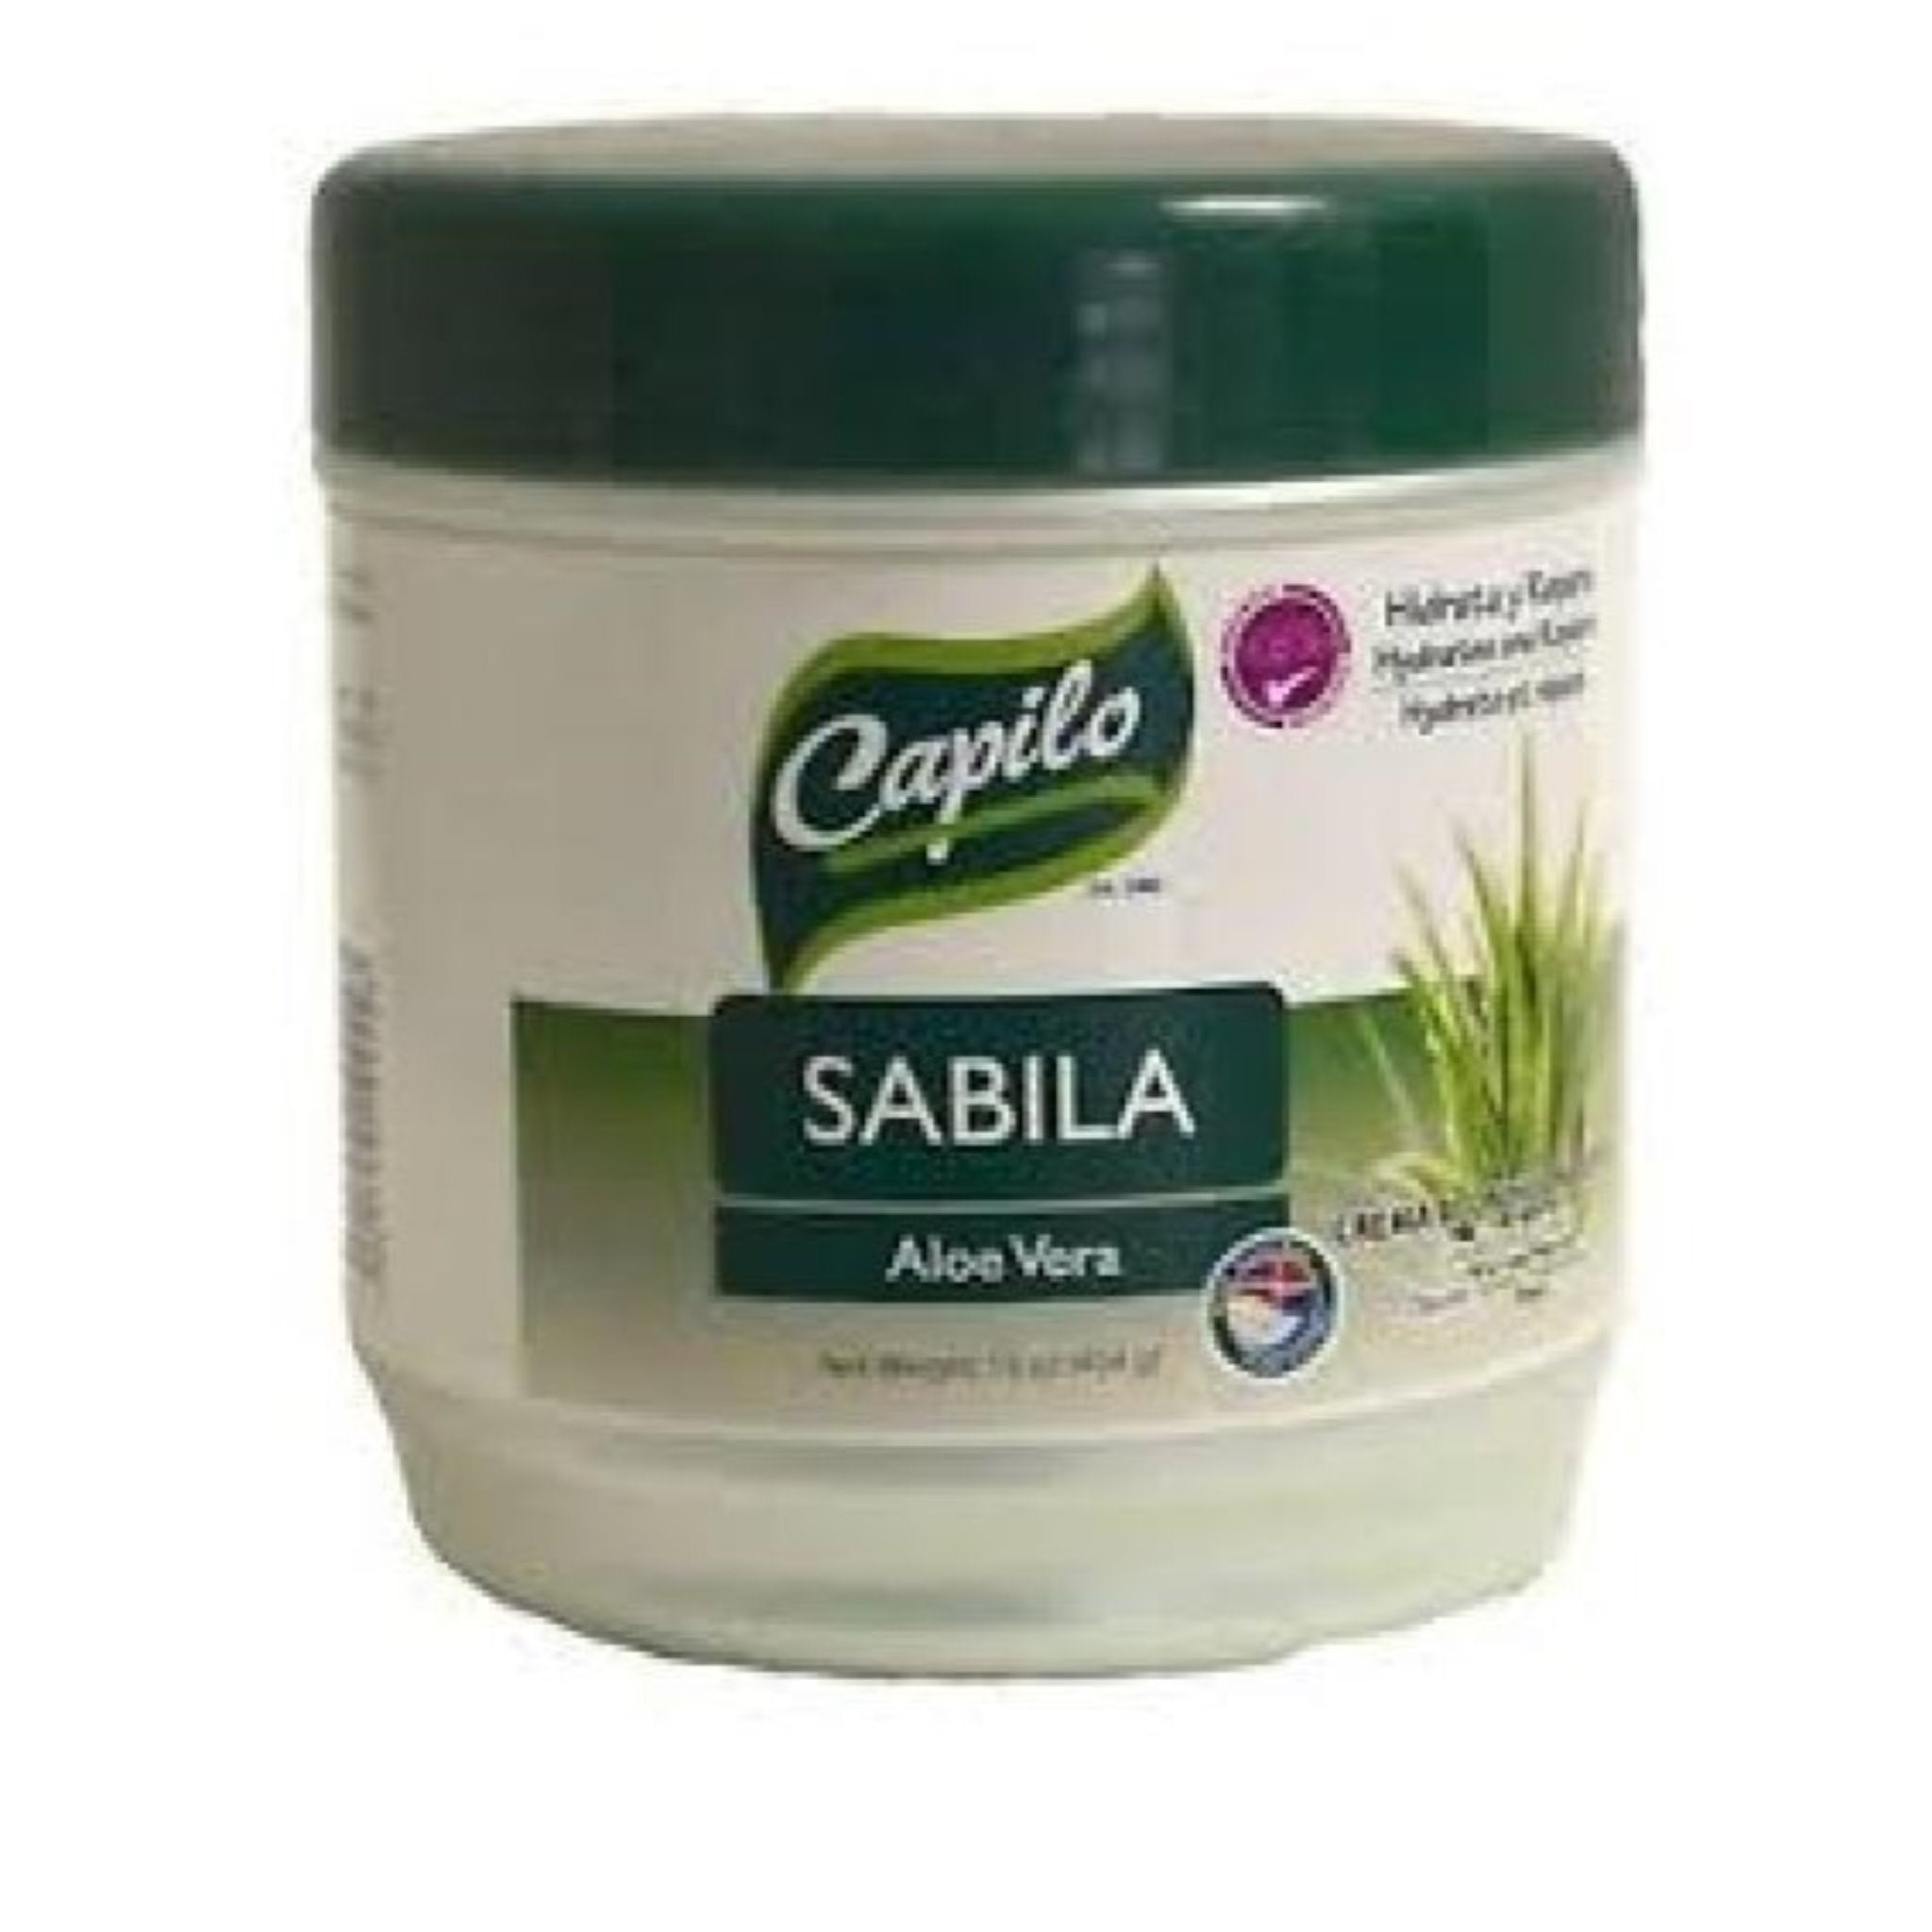 Capilo Sabila Conditioner 16 oz